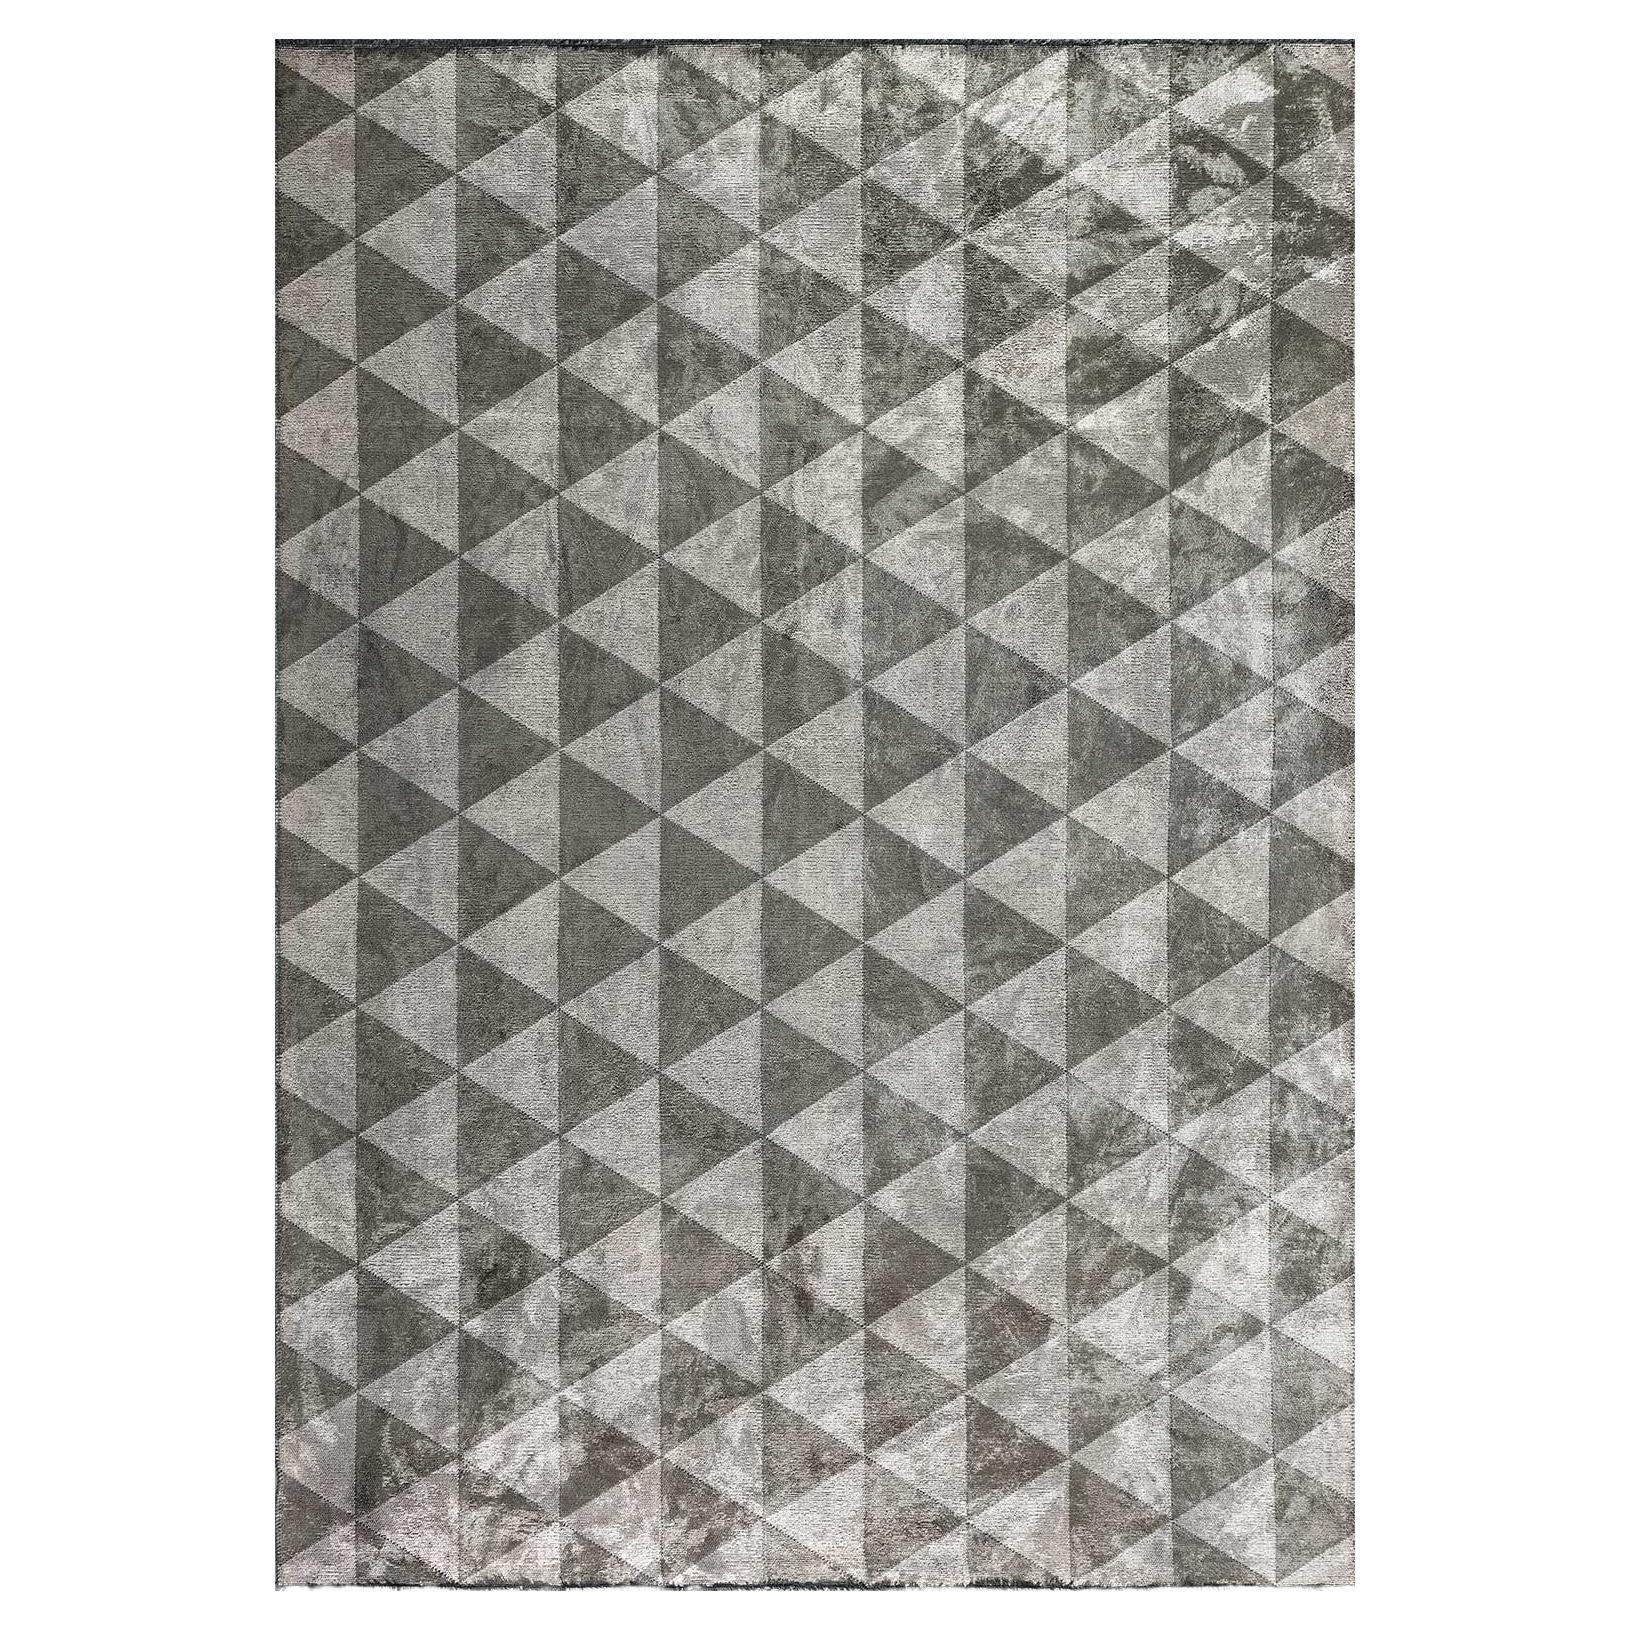 Silver Gray and Khaki Brown Triangle Diamond Geometric Pattern Rug with Shine